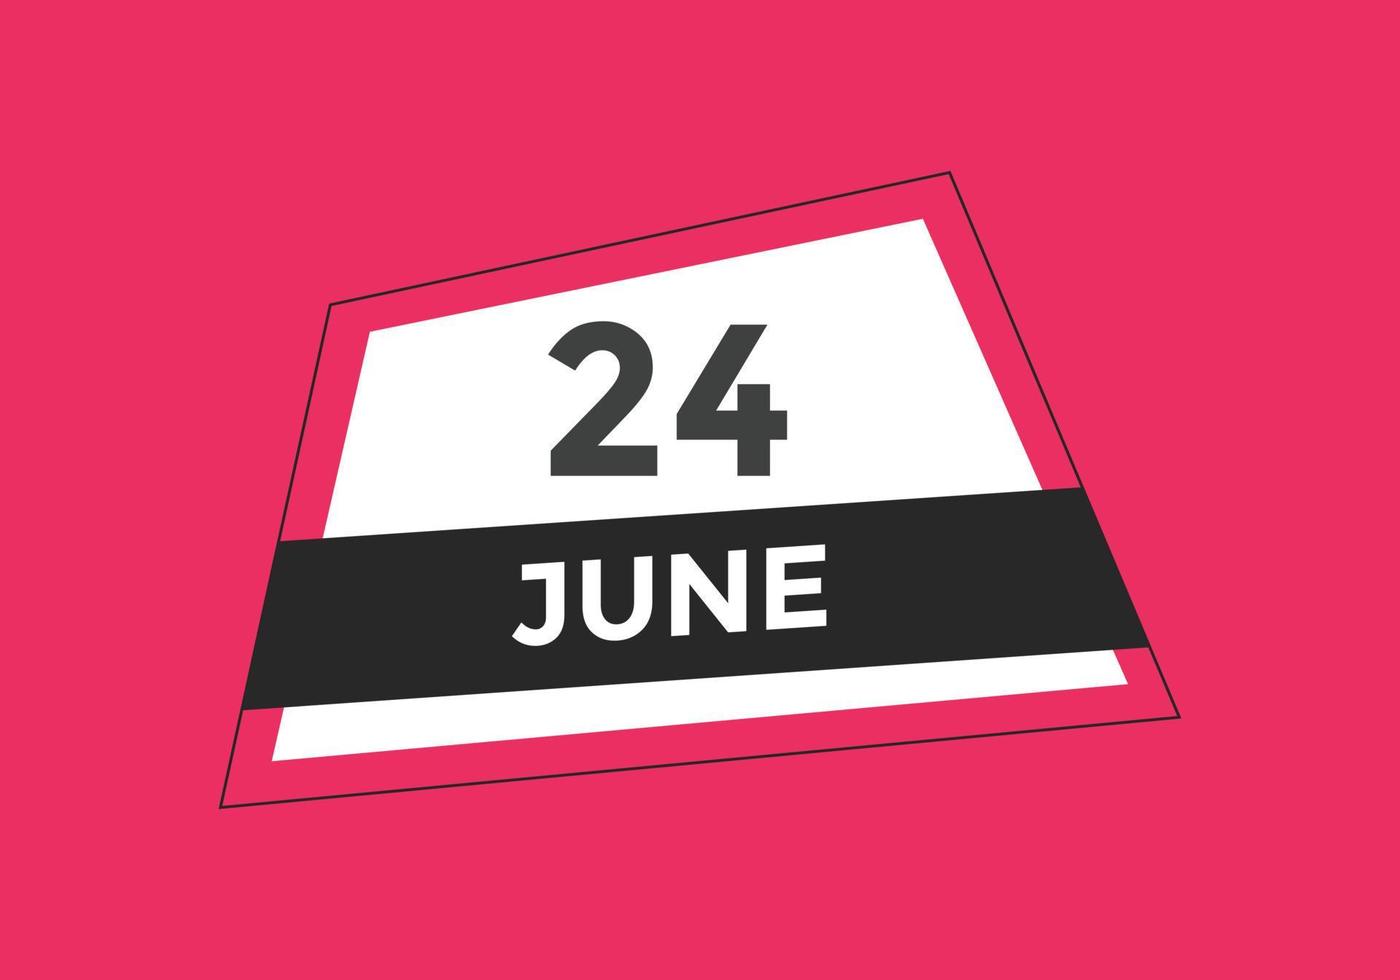 24. Juni Kalendererinnerung. 24. juni tägliche kalendersymbolvorlage. Kalender 24. Juni Icon-Design-Vorlage. Vektor-Illustration vektor